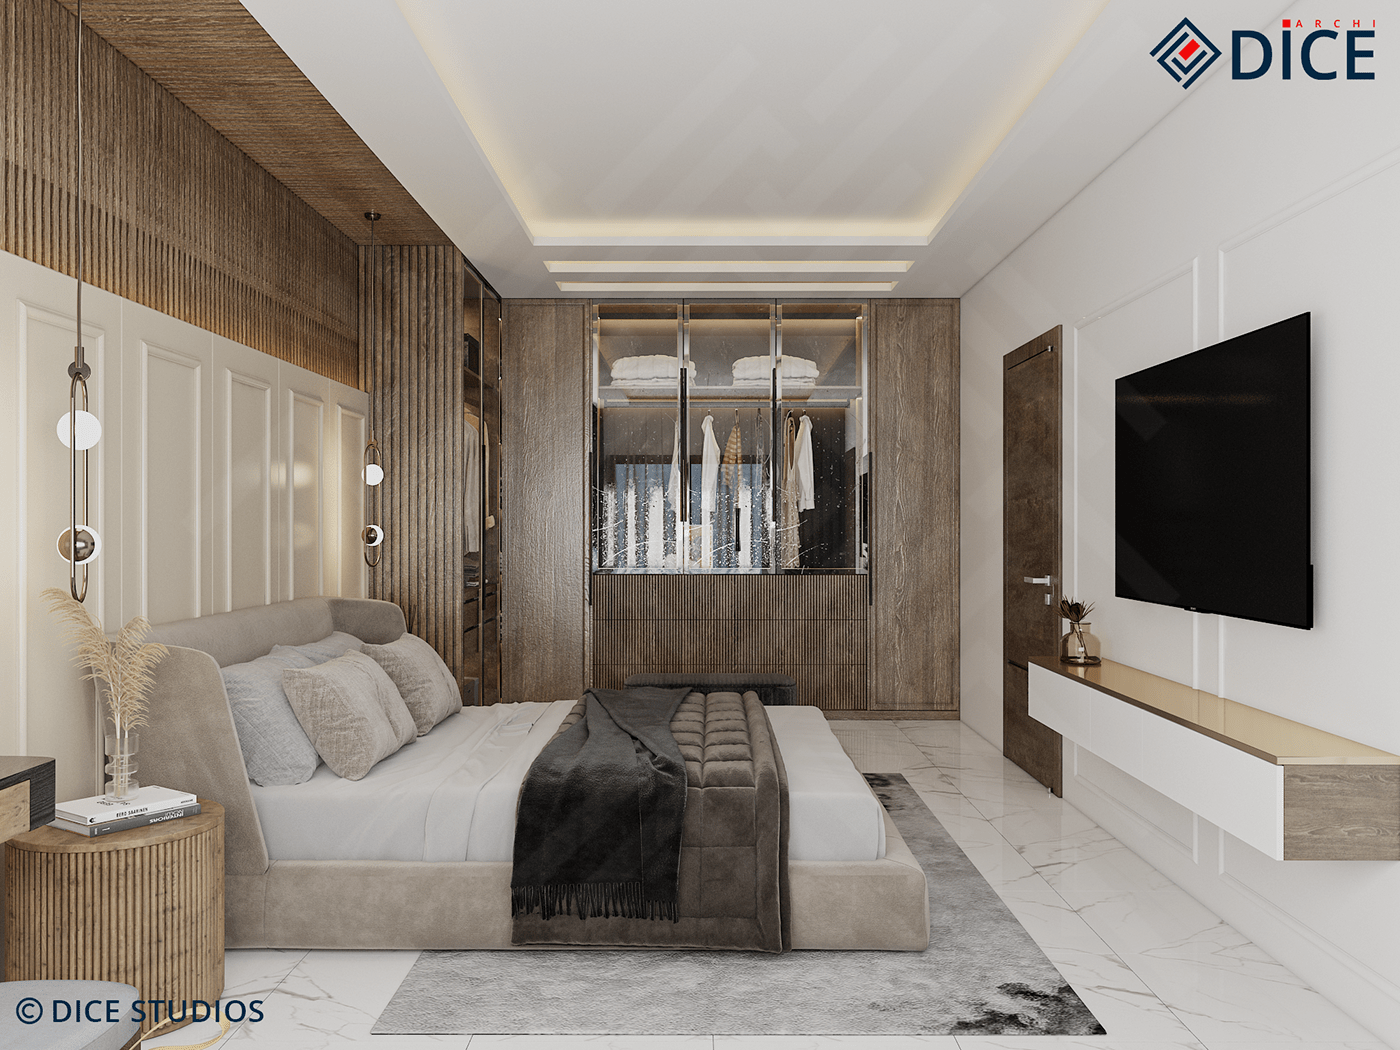 3D architecture interior design  luxury master bedroom Render visualization vray